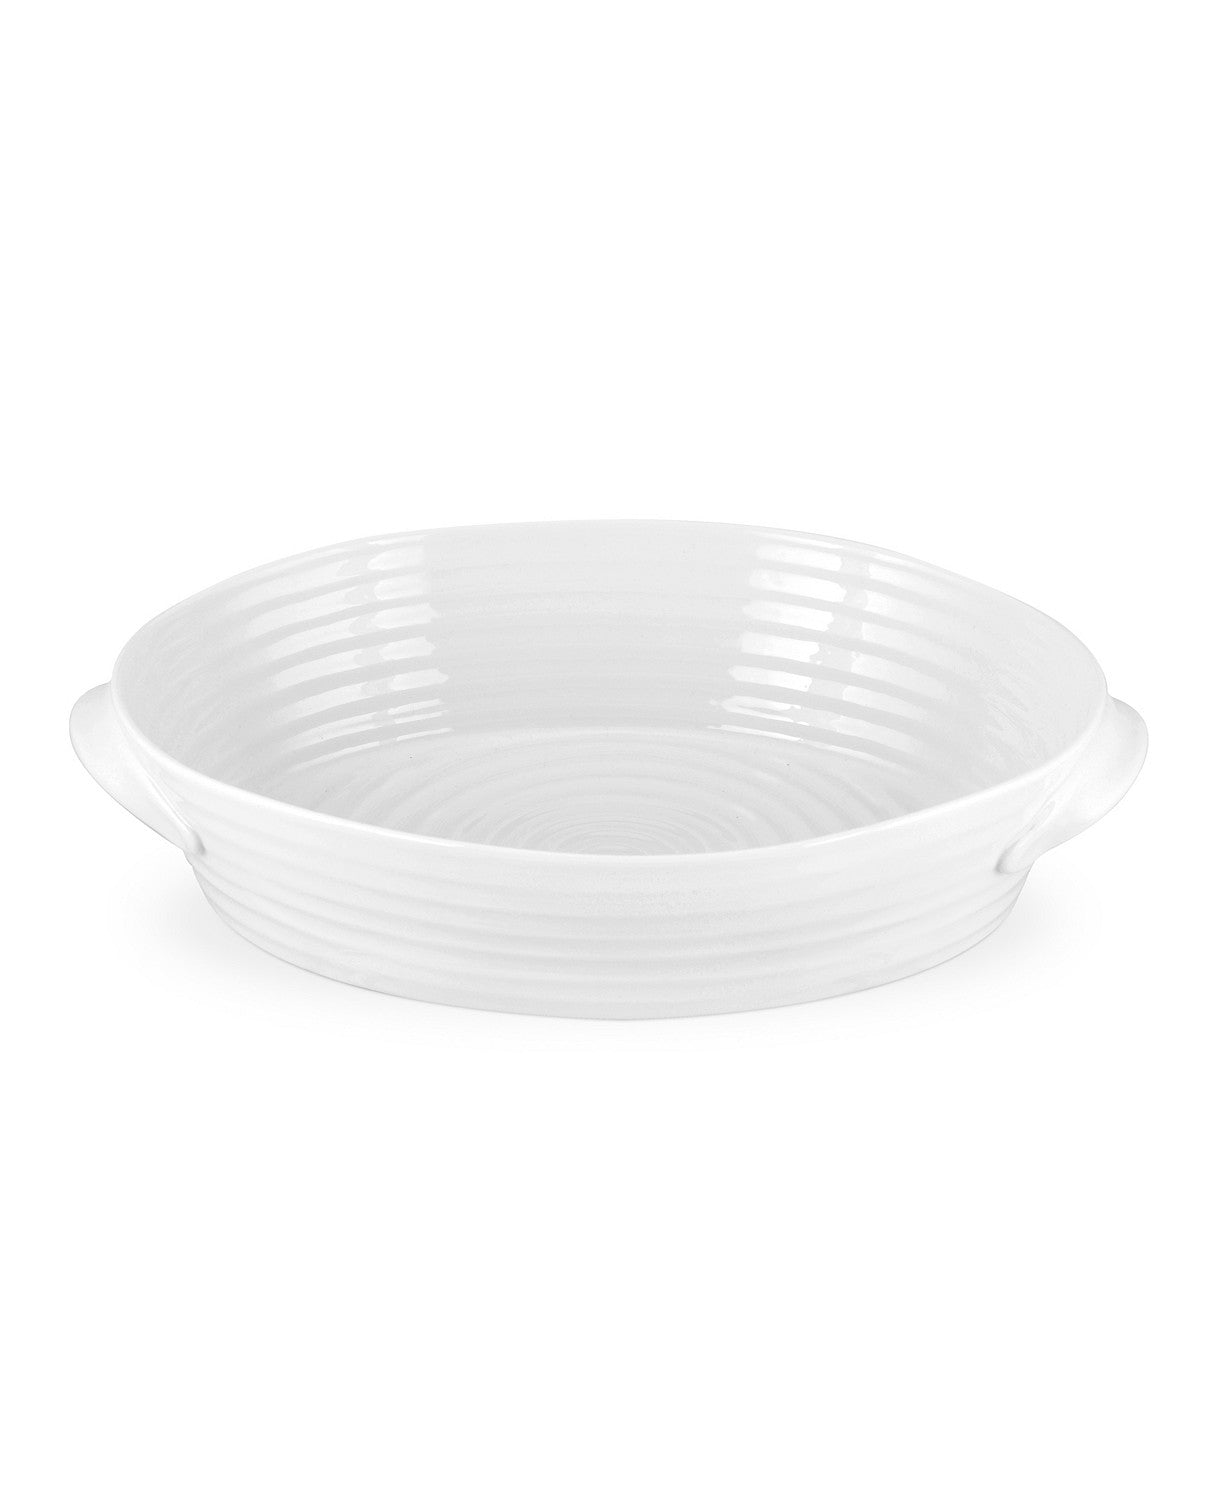 SOPHIE CONRAN Oval Roasting Dish - White